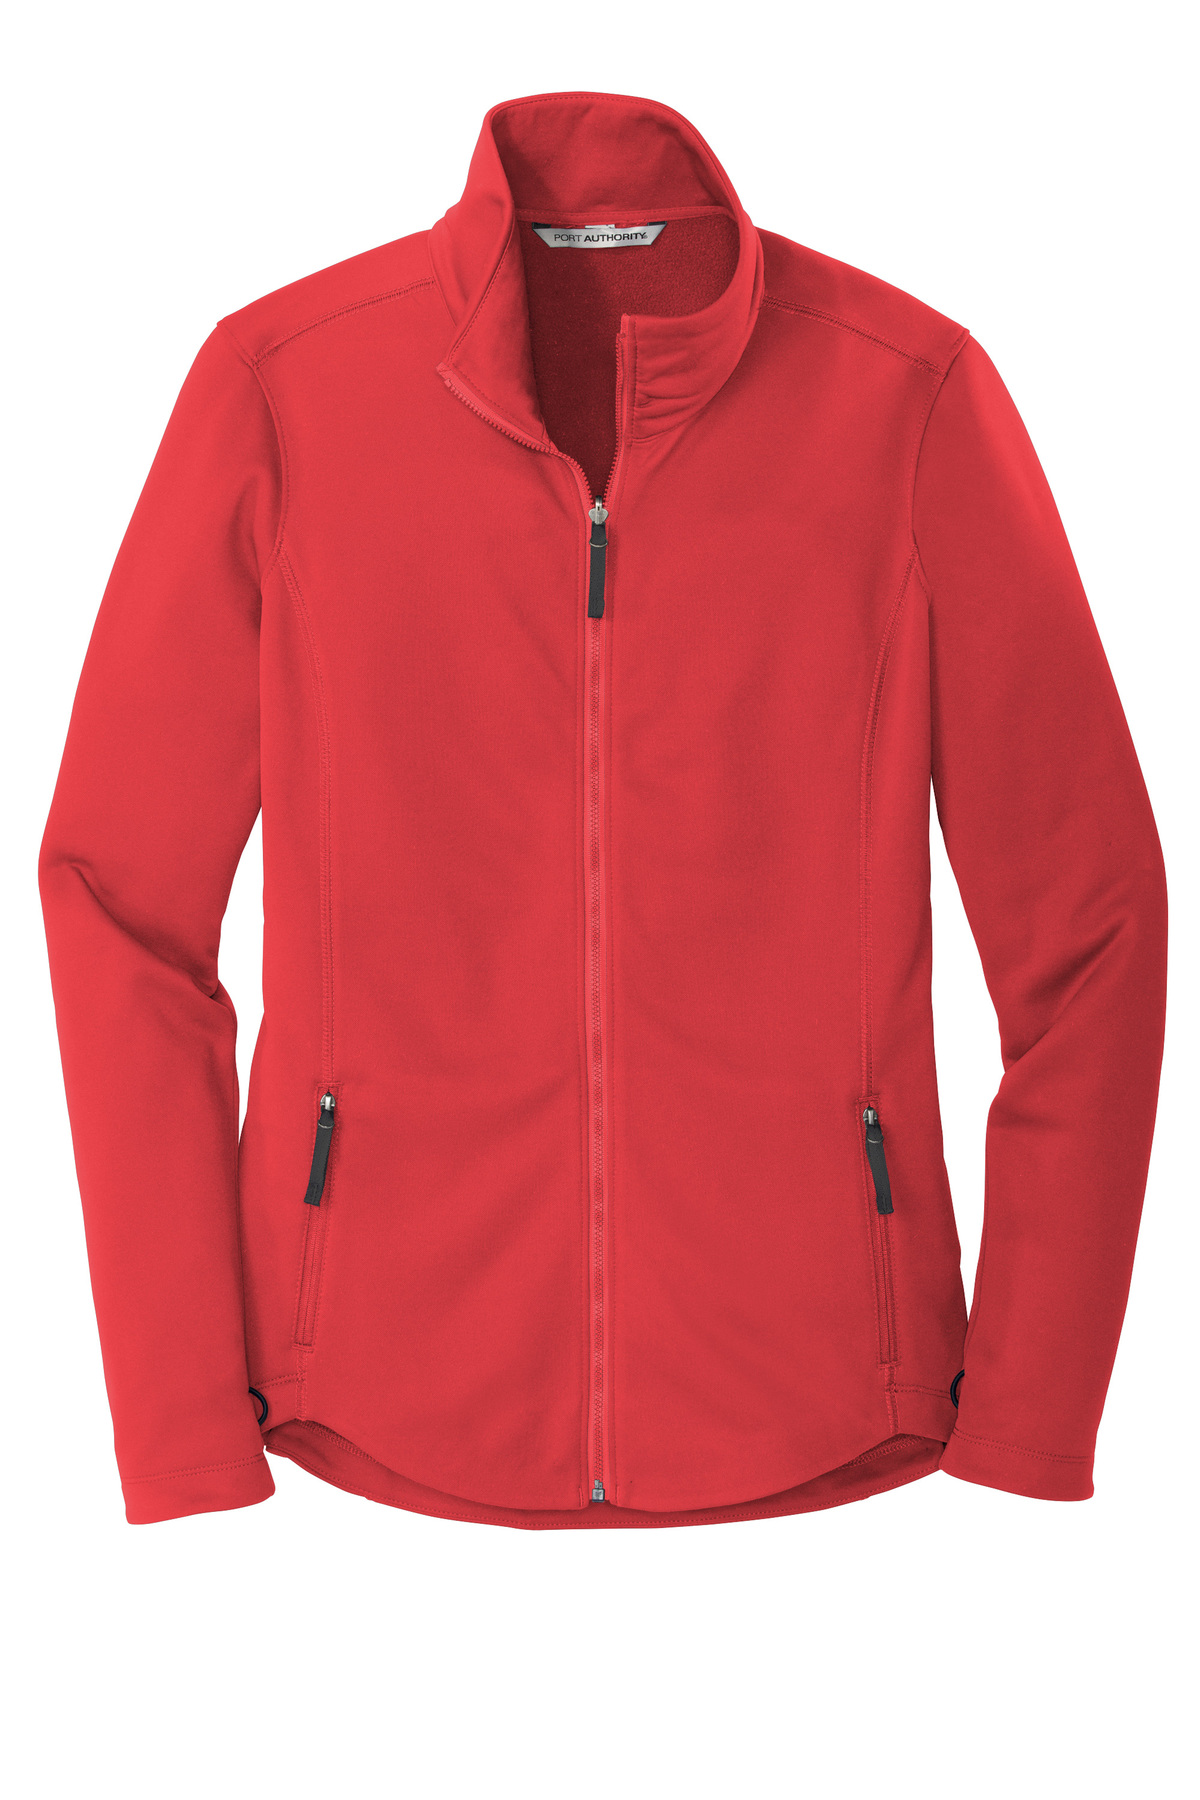 Port Authority Ladies Collective Smooth Fleece Jacket | Product | SanMar